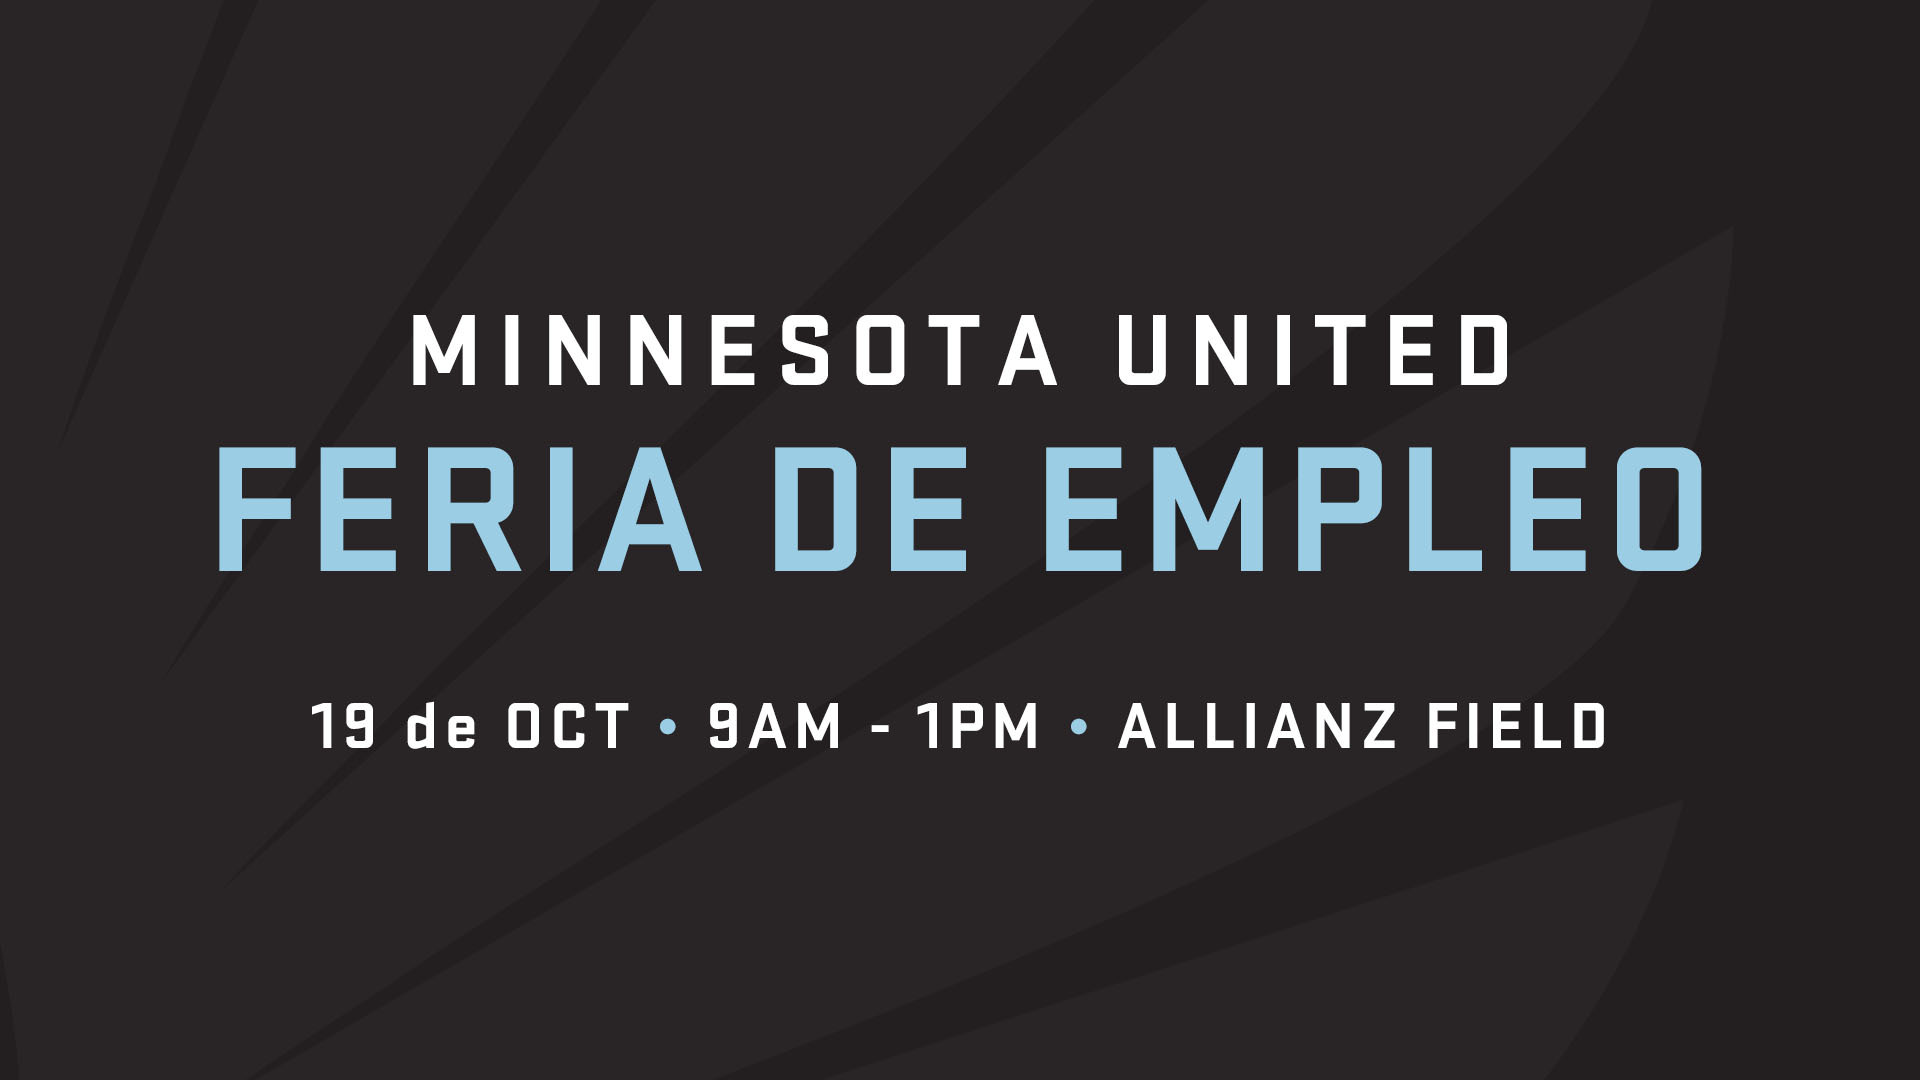 Minnesota United: Feria de Empleo (Job Fair) Photo